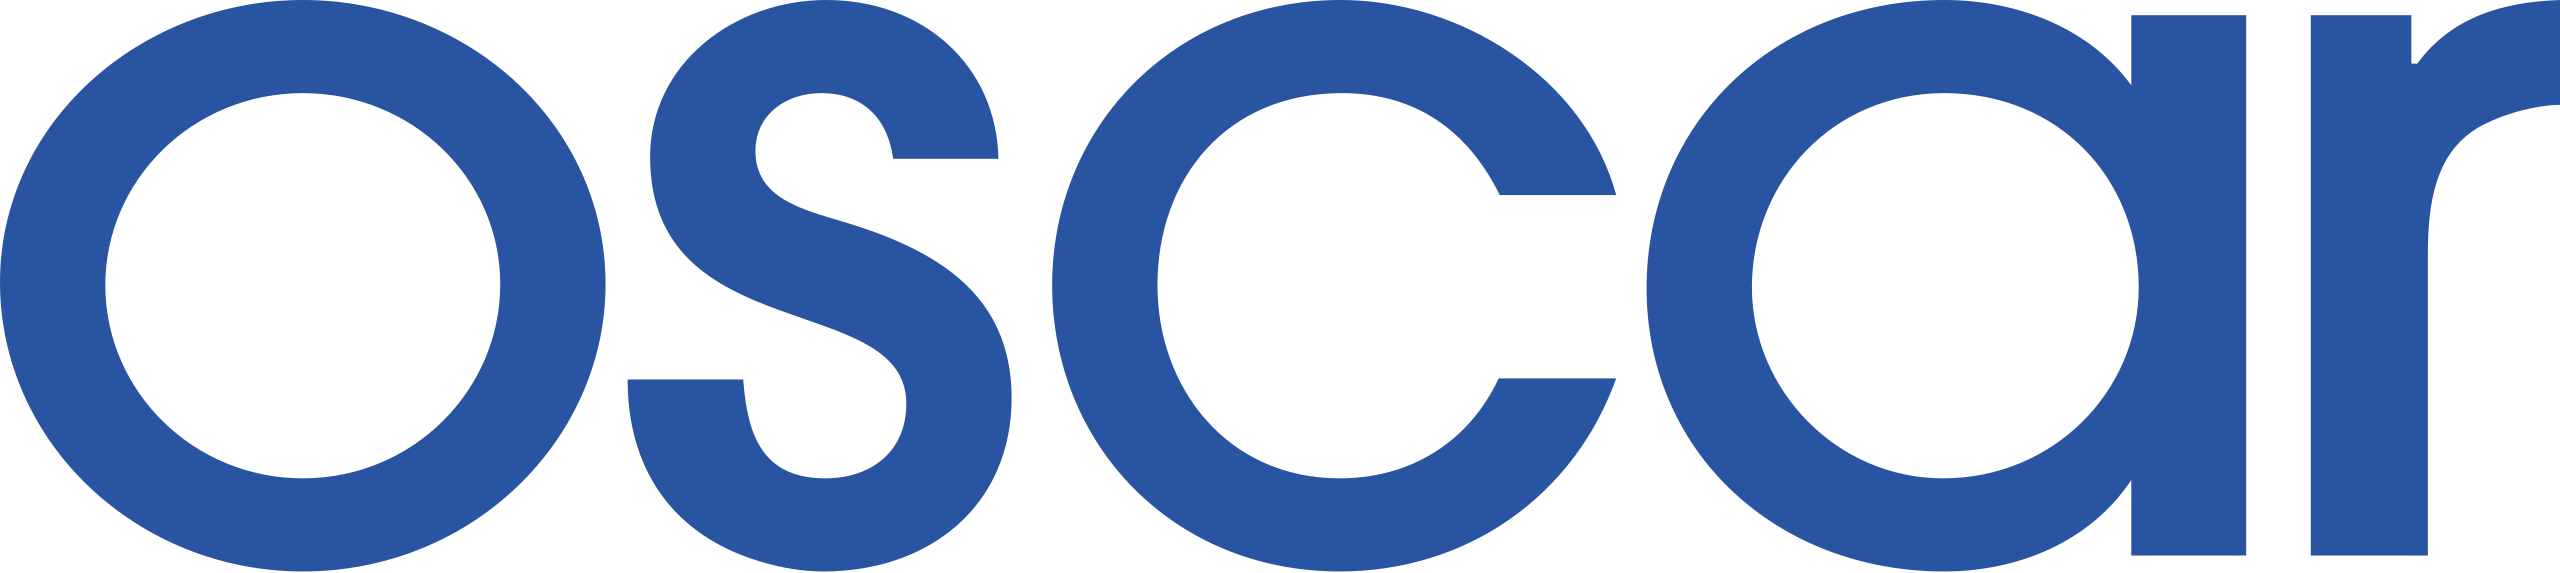 Oscar_Health_logo